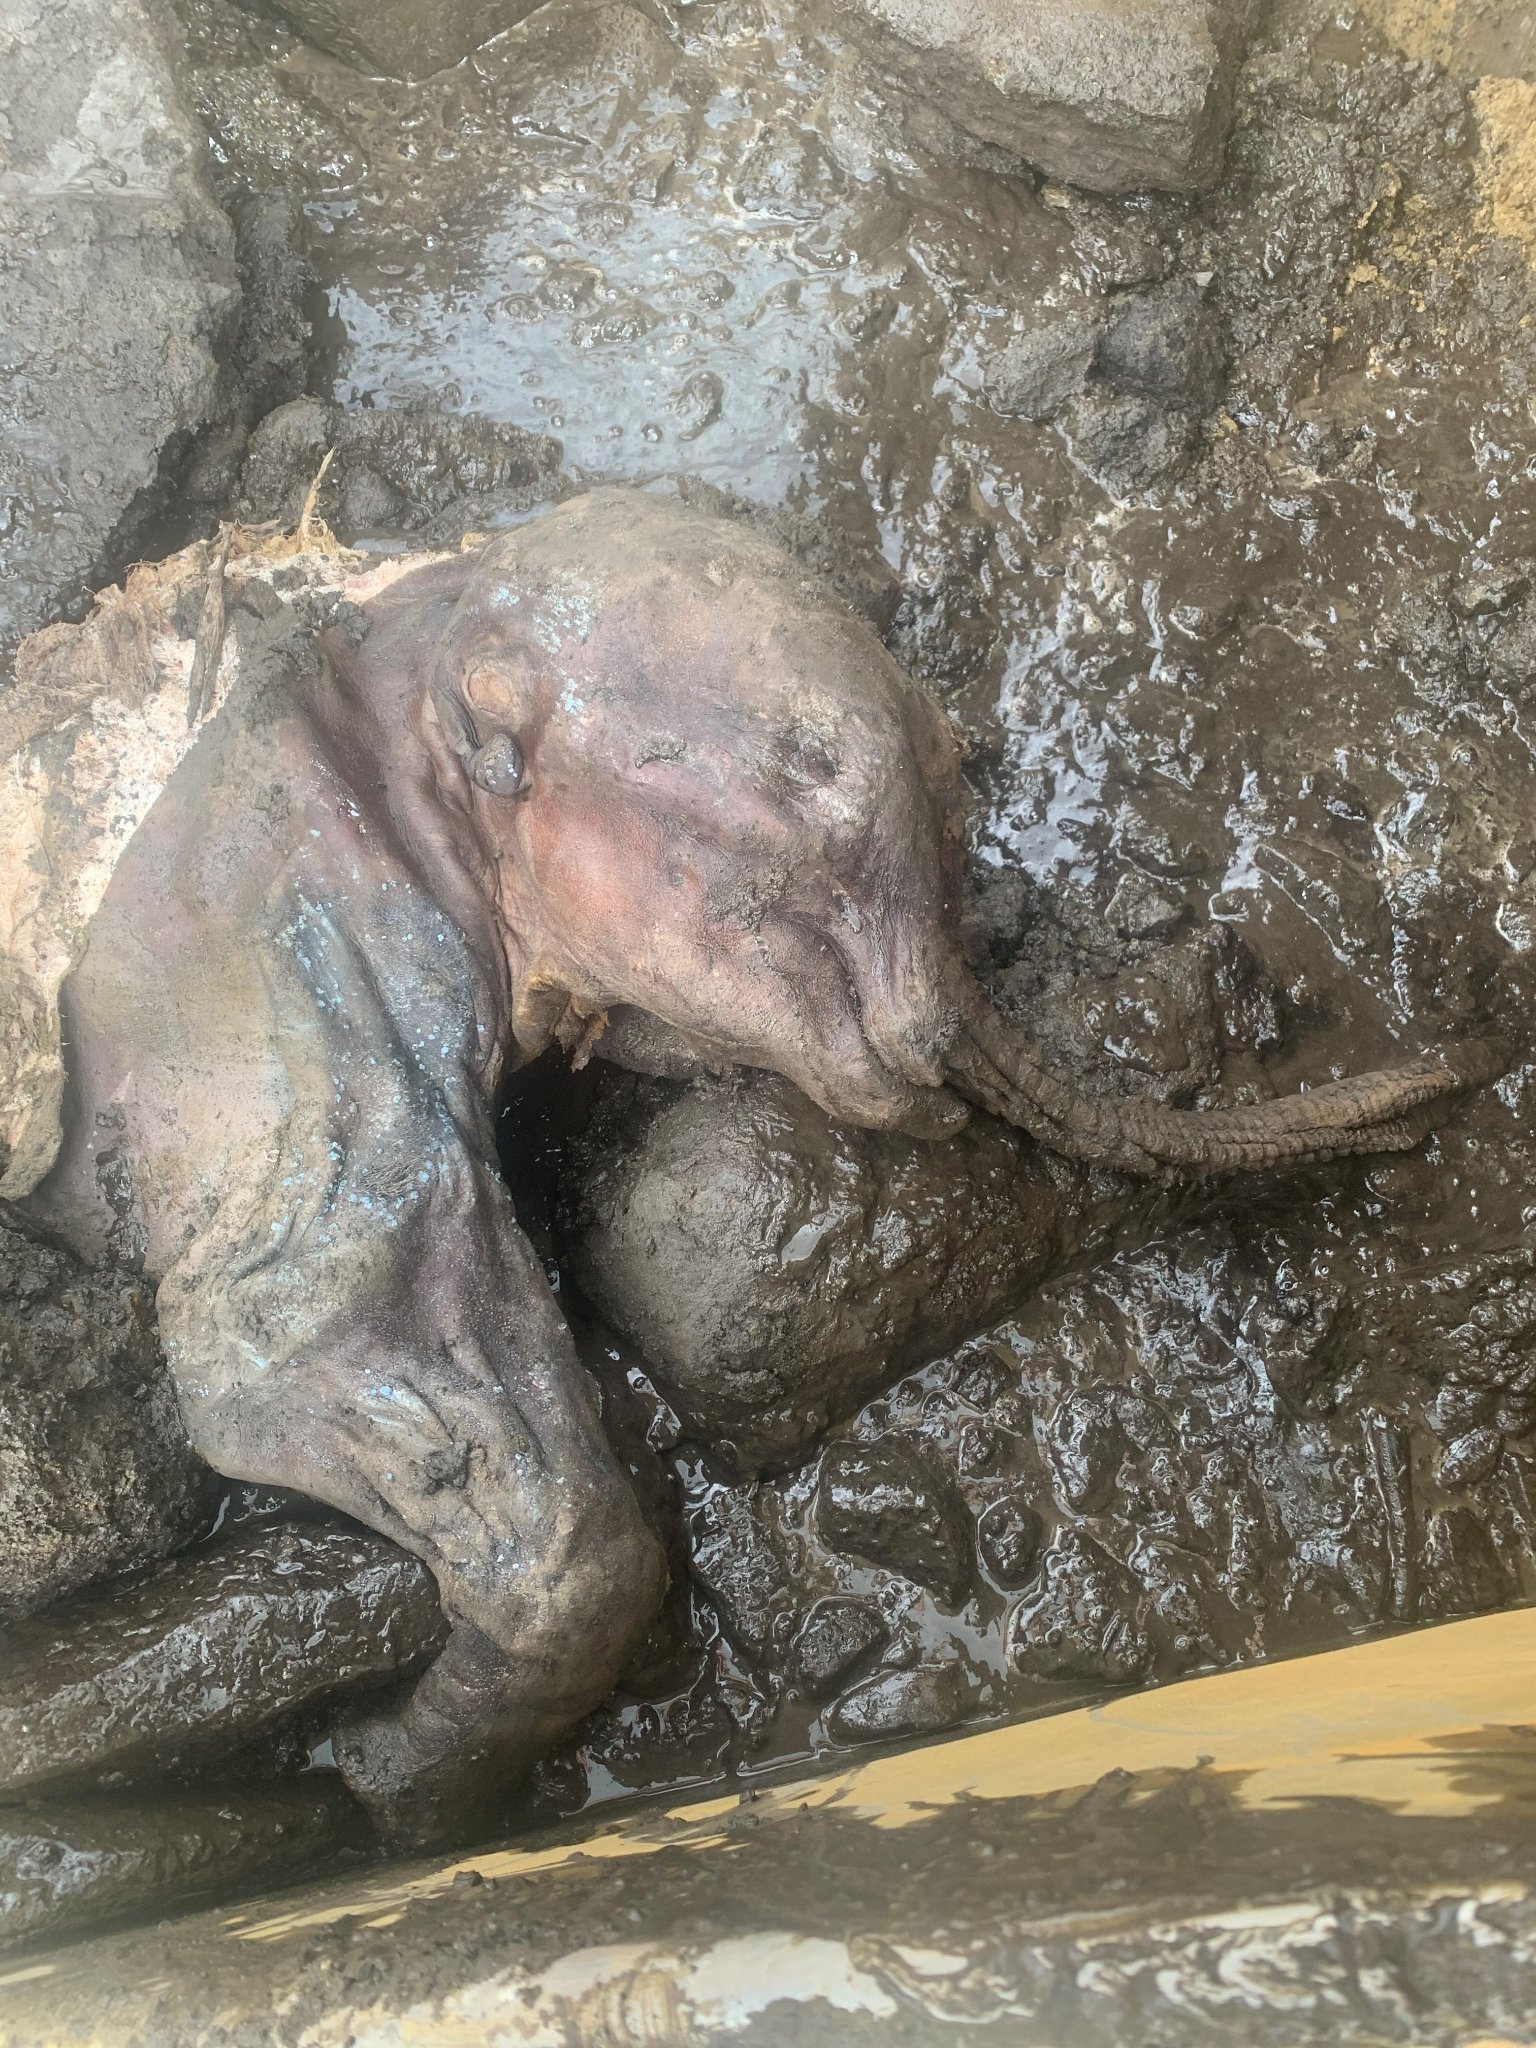 Whole baby mammoth found in Yukon gold mine